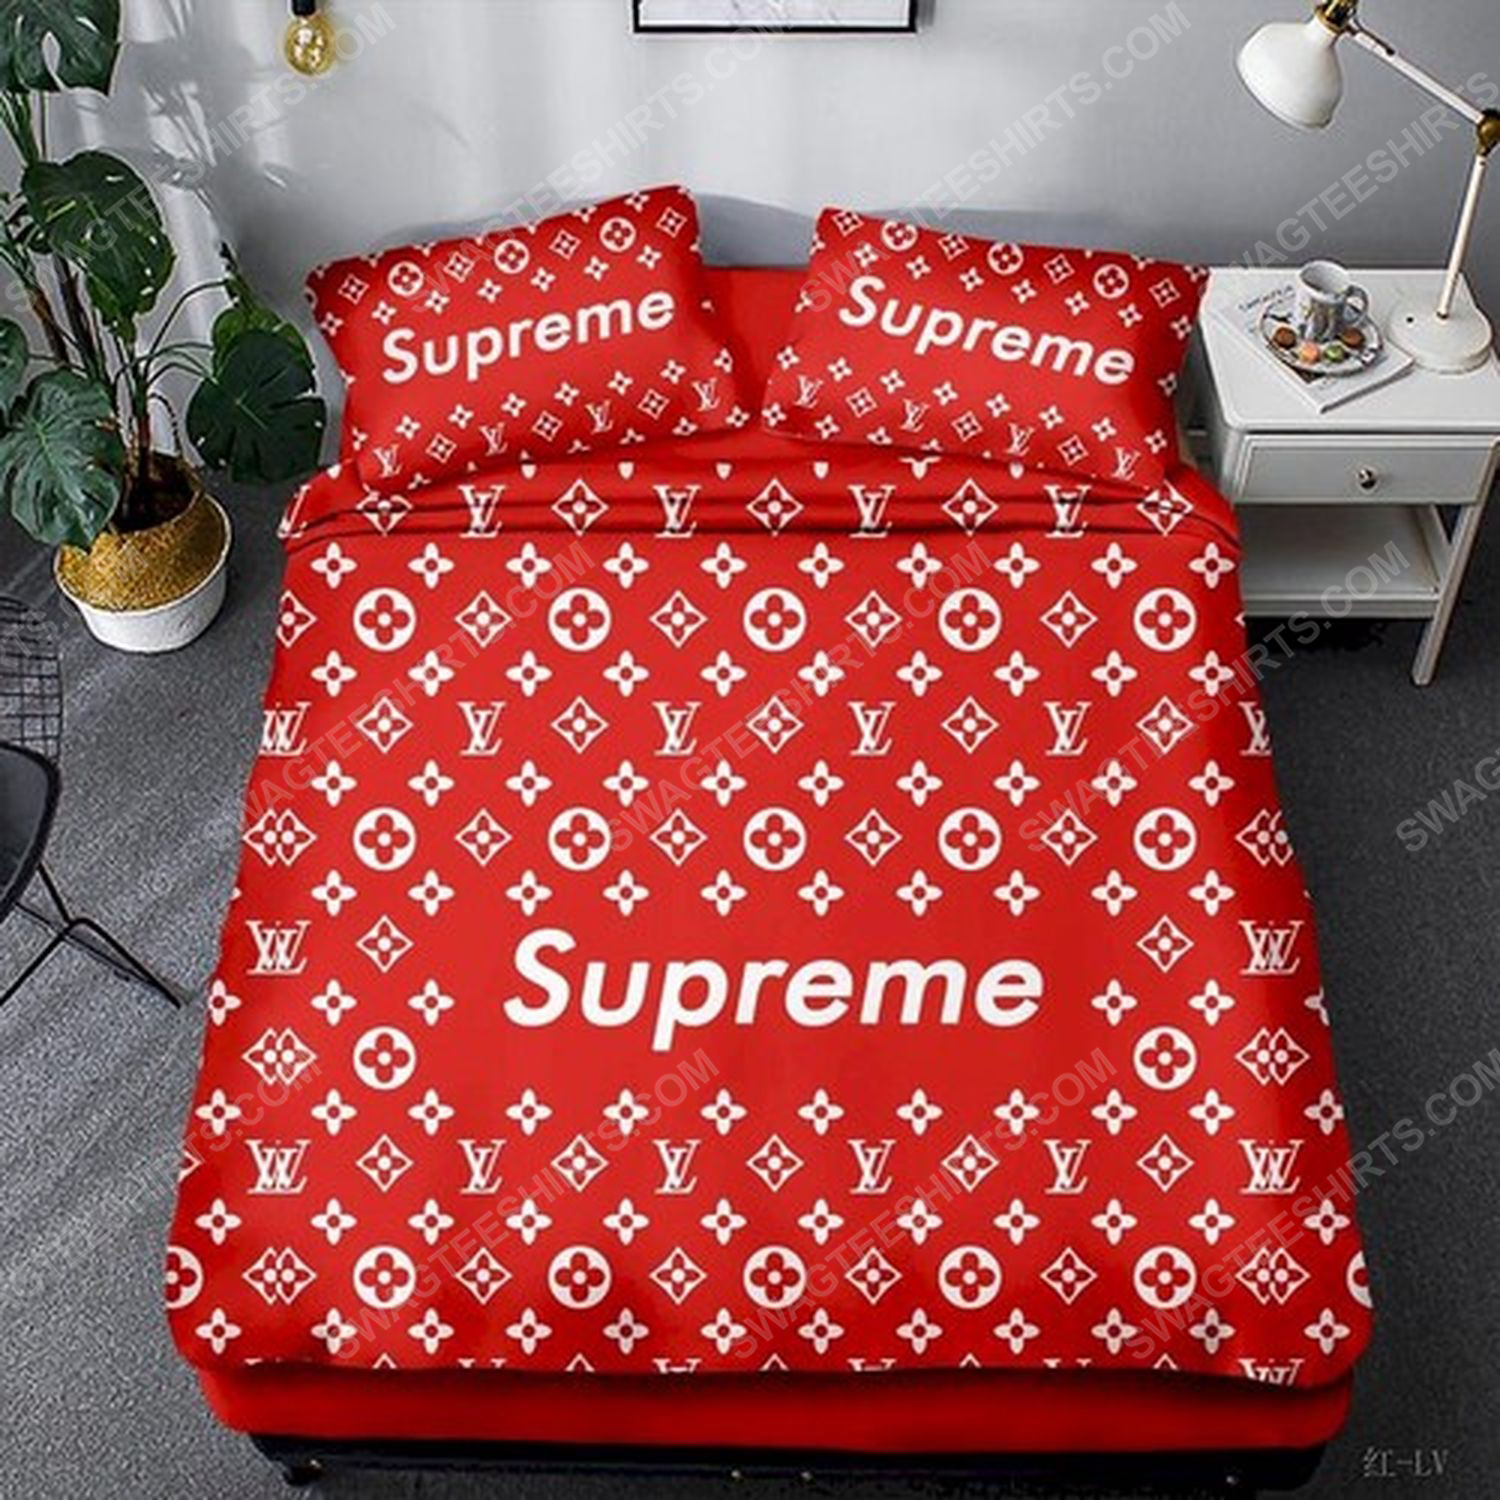 Supreme and lv monogram symbols full print duvet cover bedding set 2 - Copy